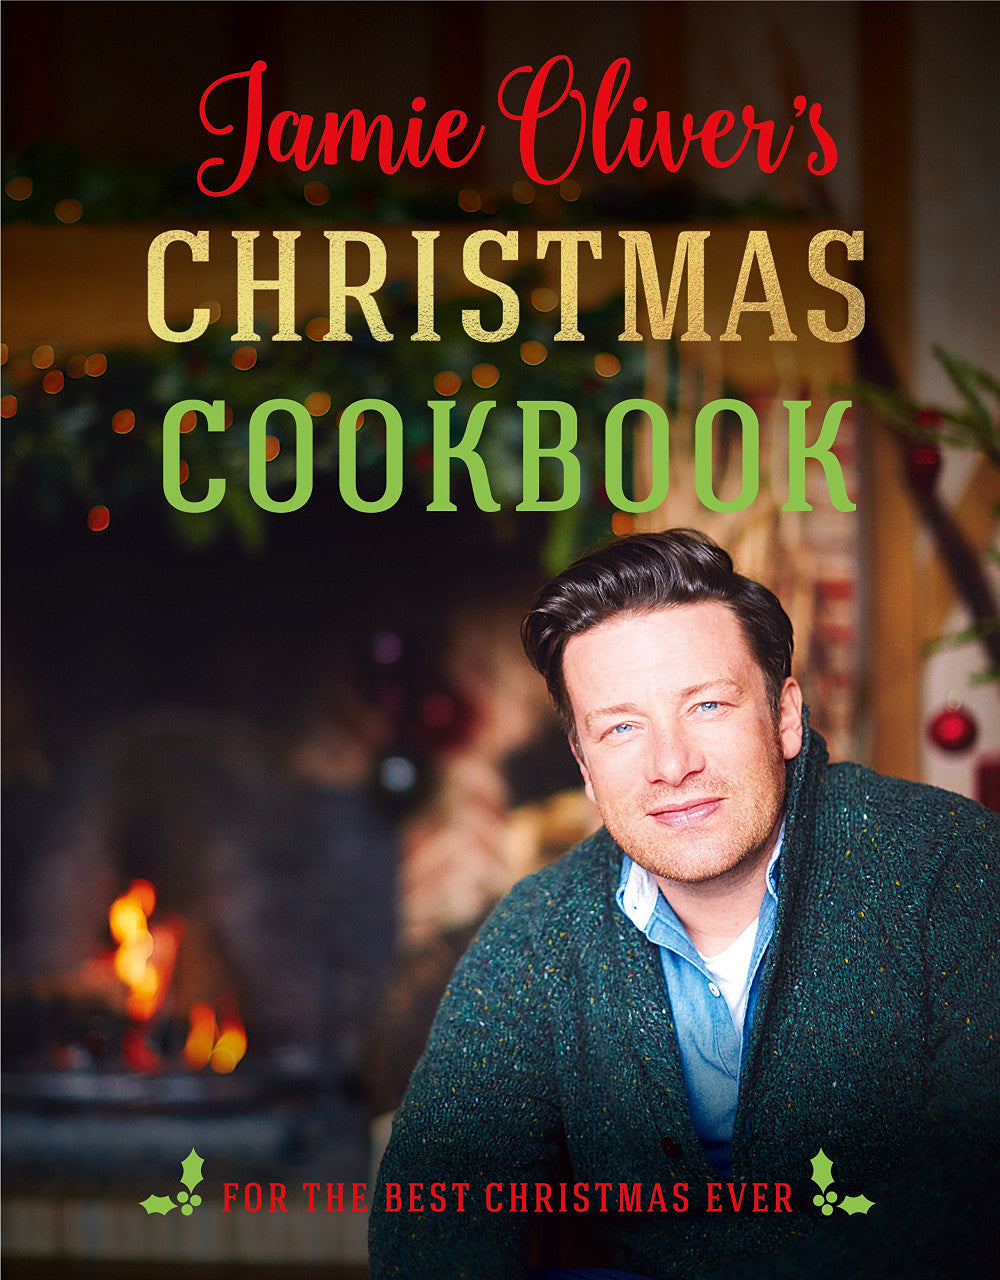 Jamie Oliver - Christmas hardback cookbook. For the best Christmas Ever.